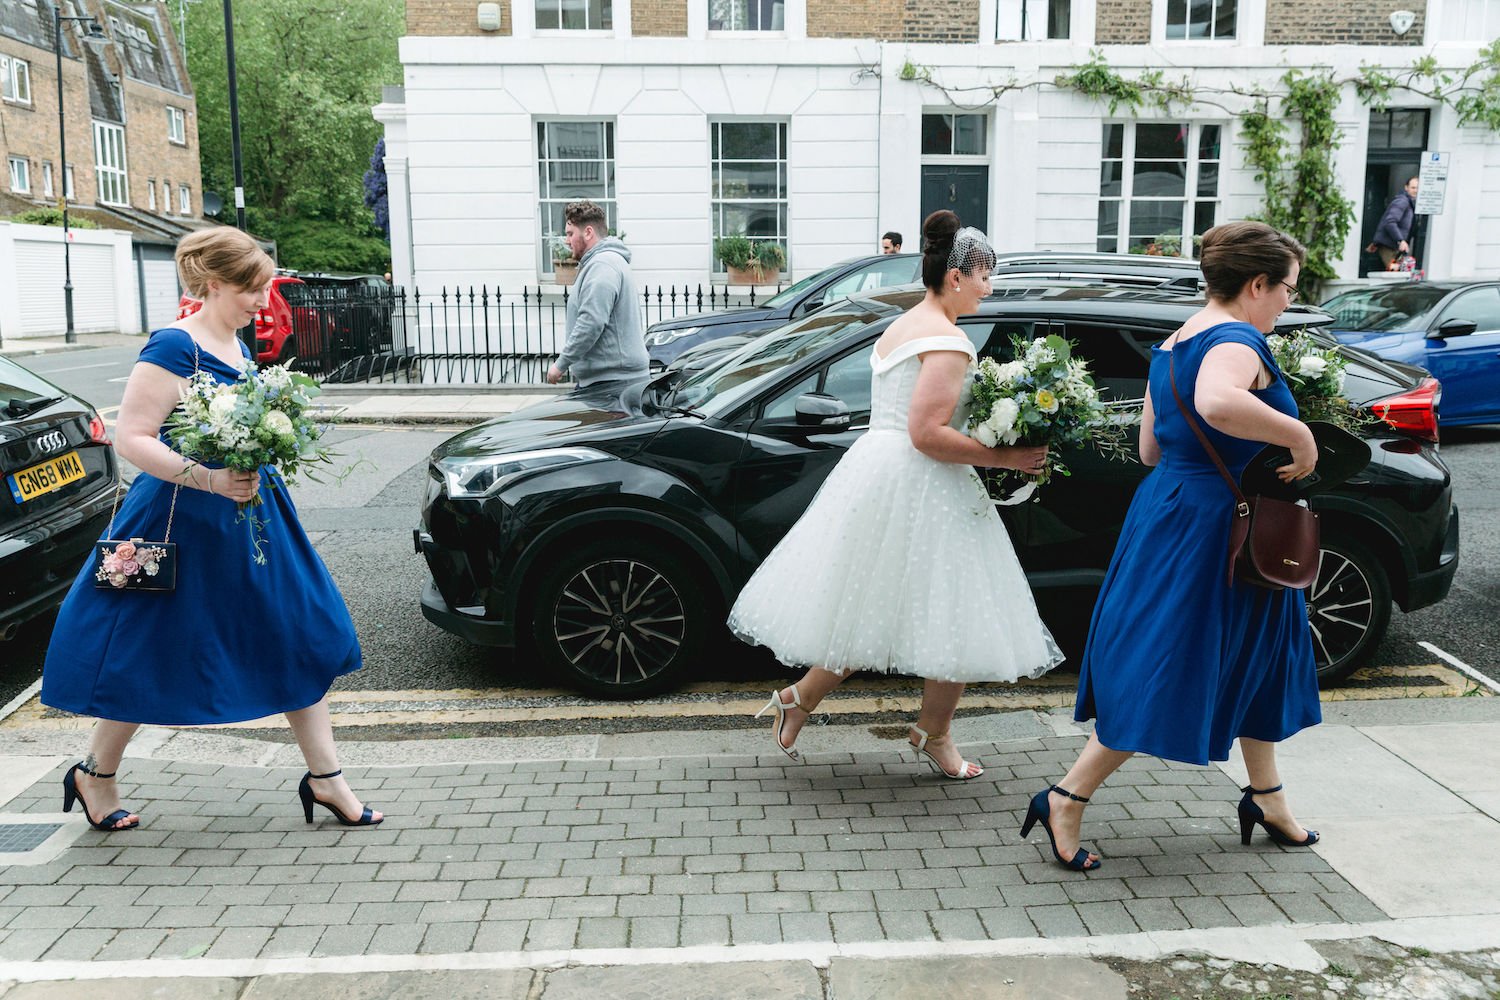 City bridesmaids in blue dress